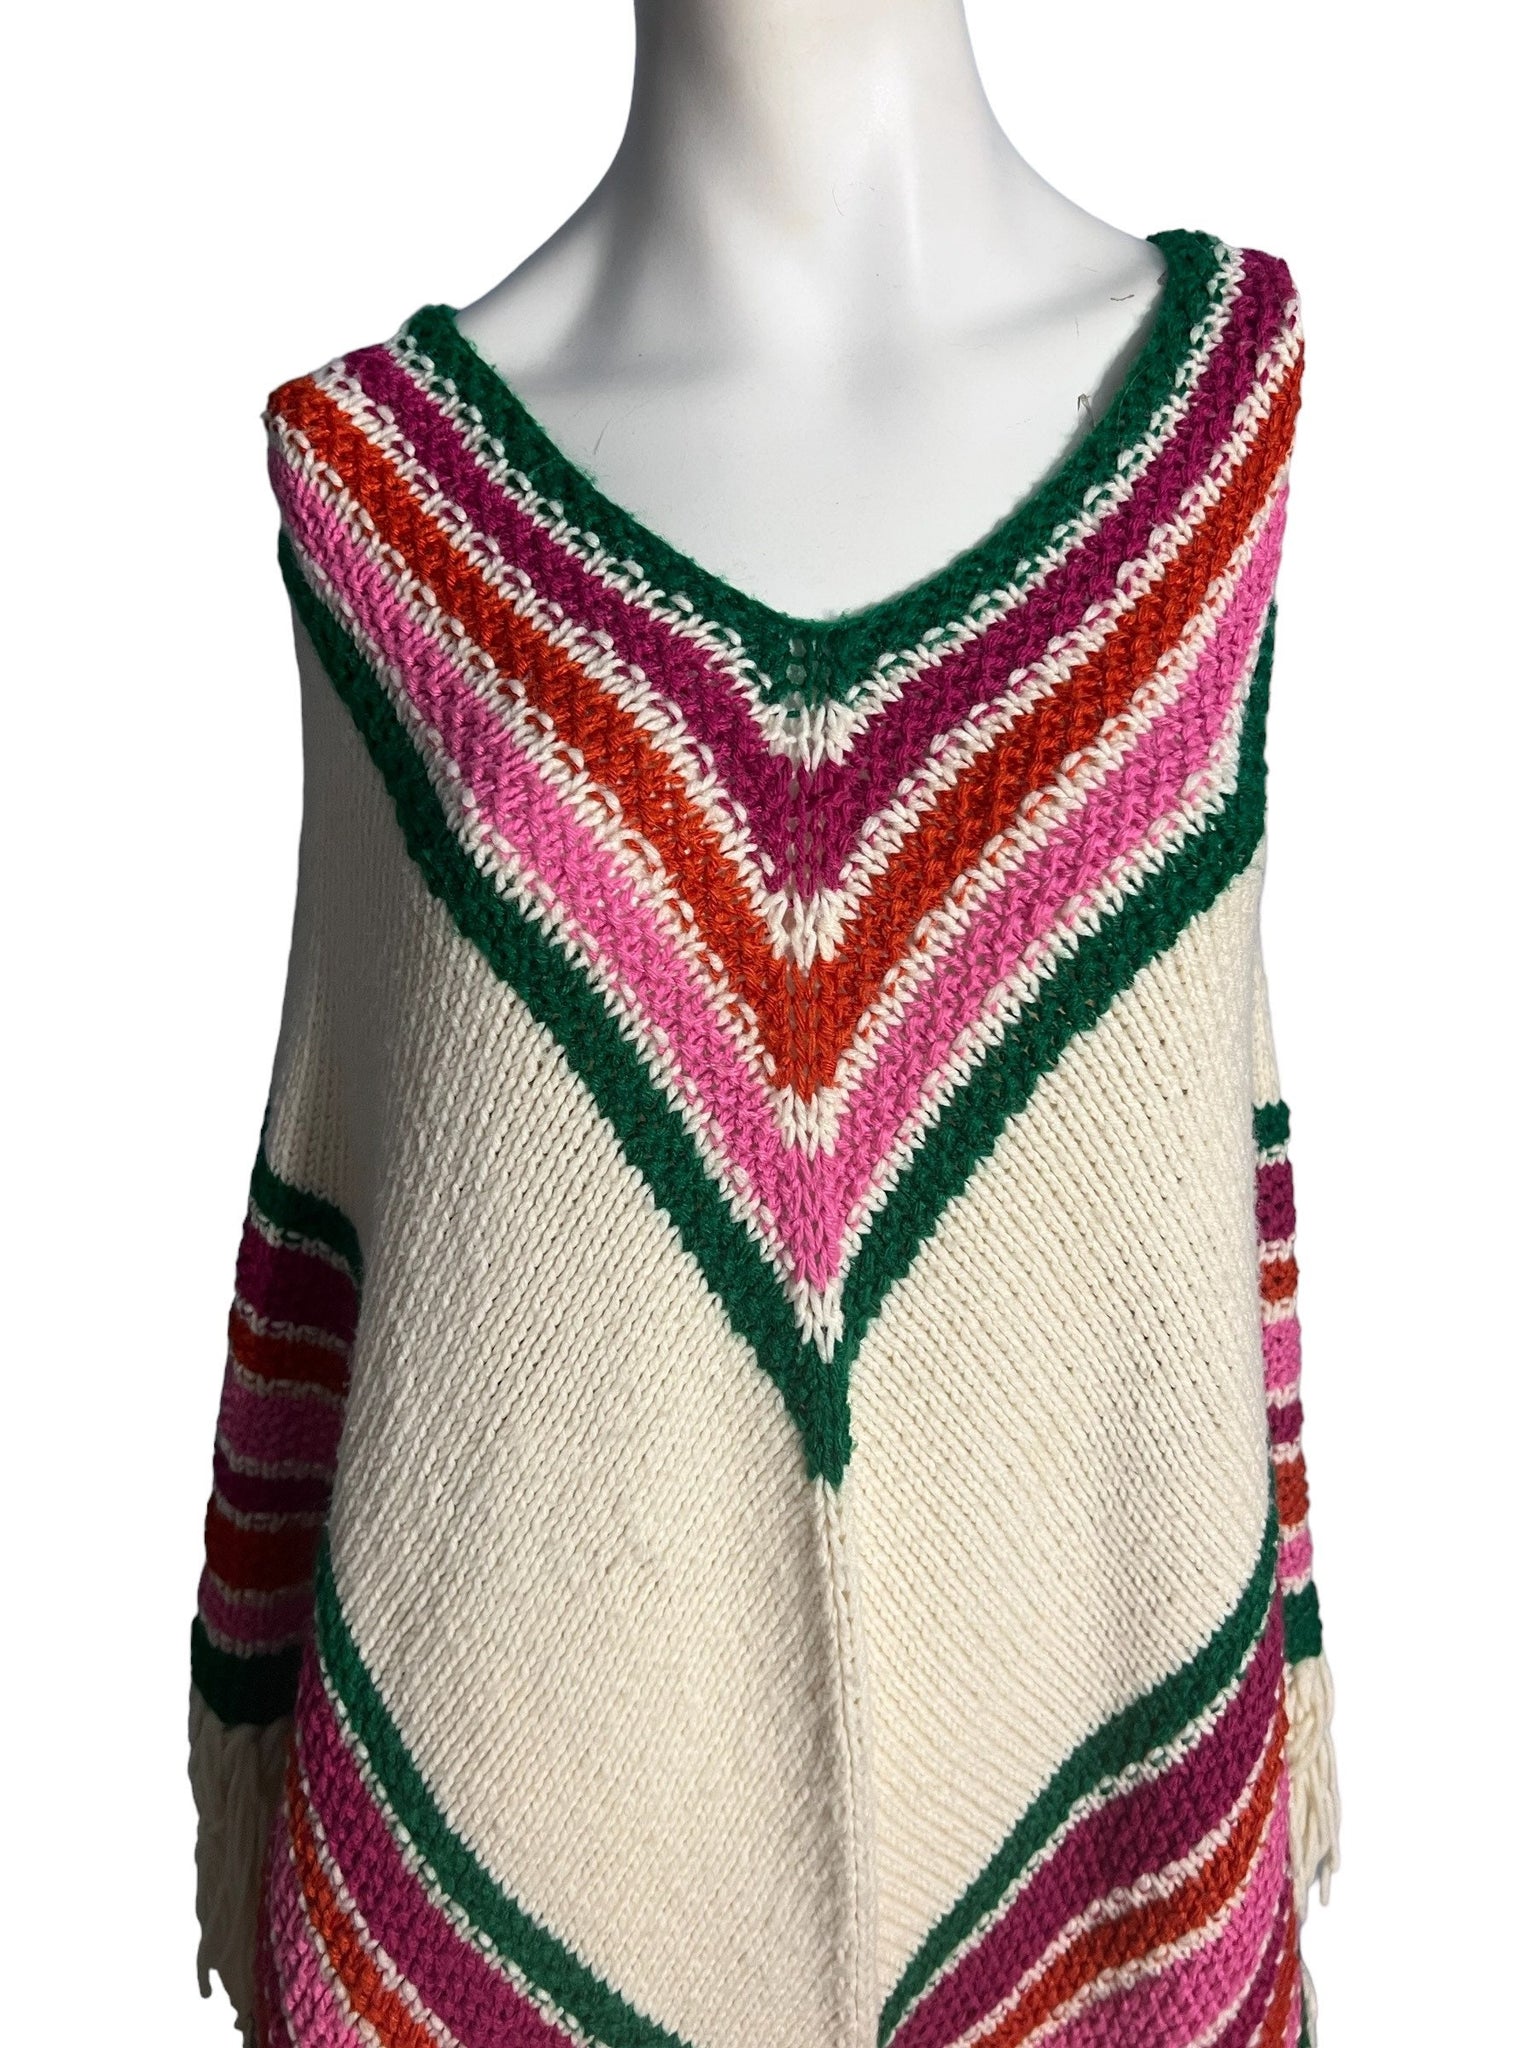 Vintage 70's knit shawl chevron